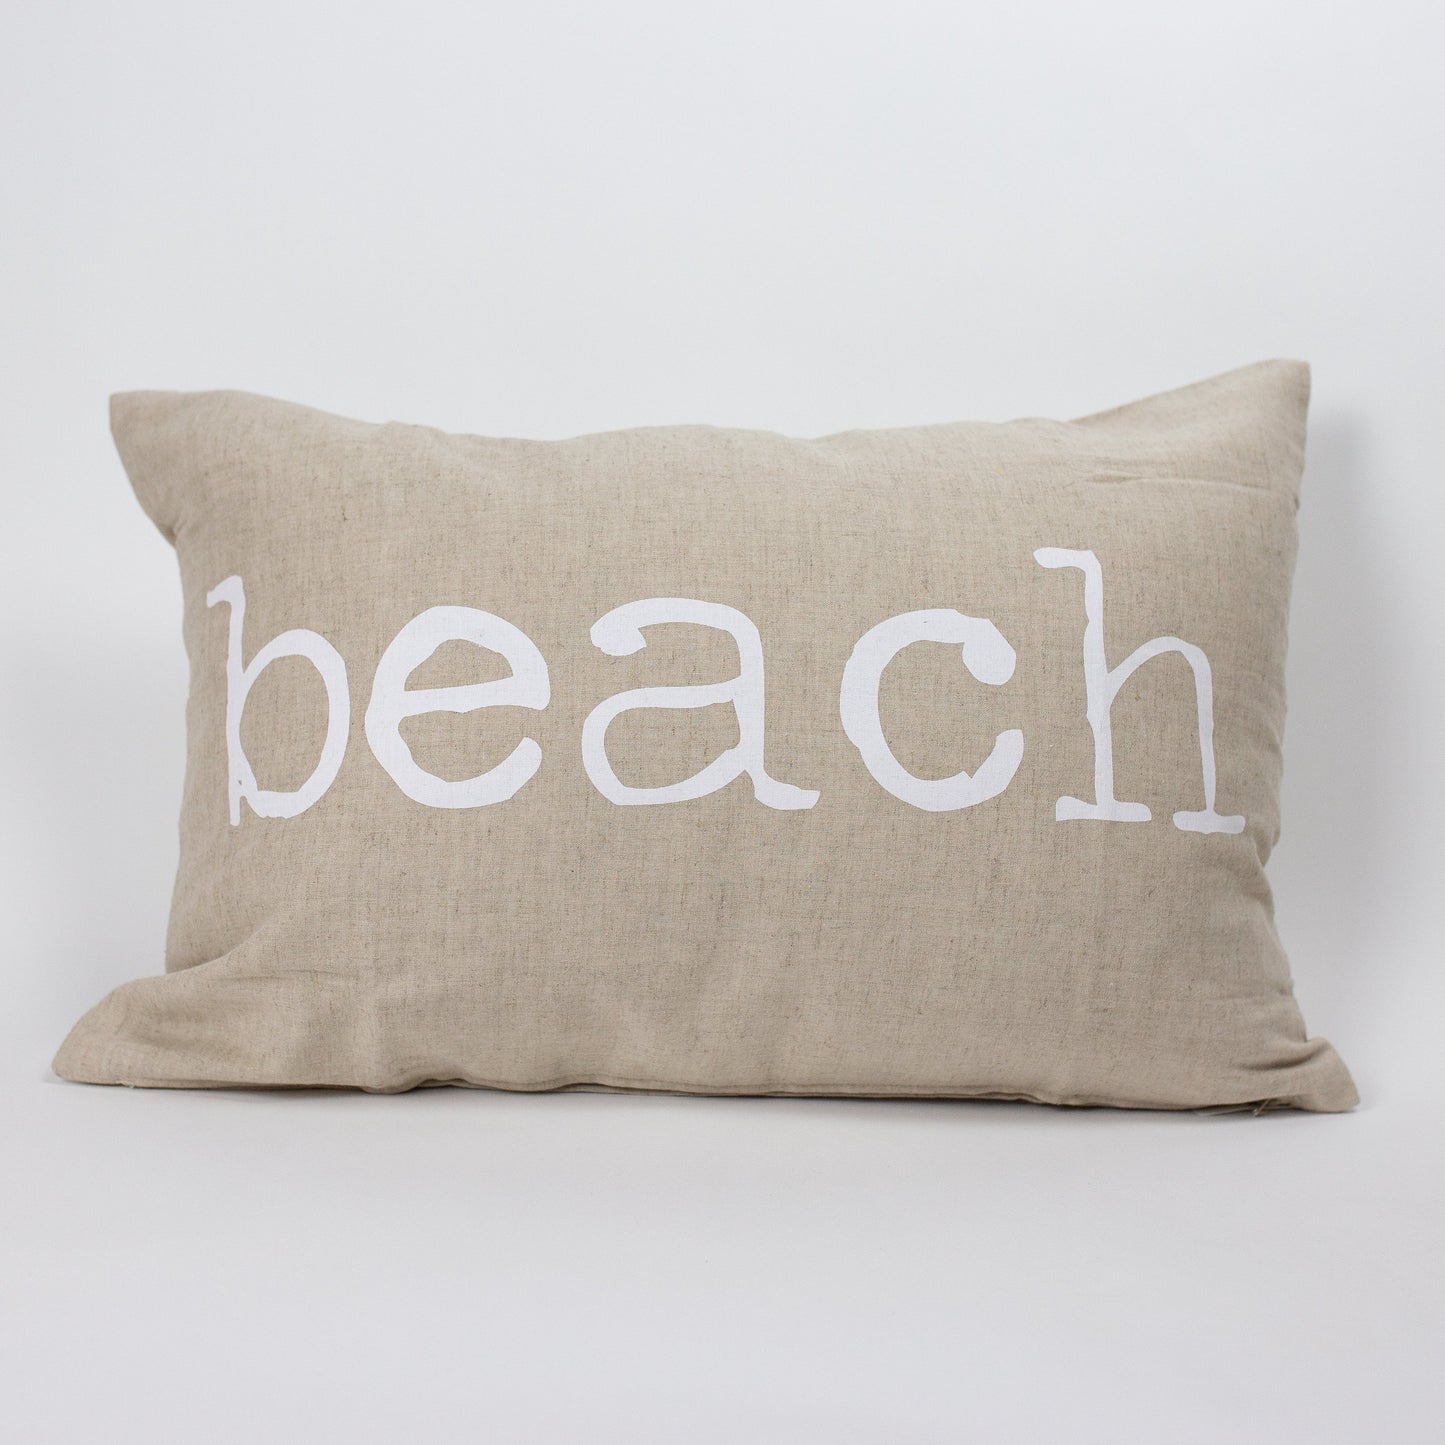 Beach/Kahakai Square Pillow Cover